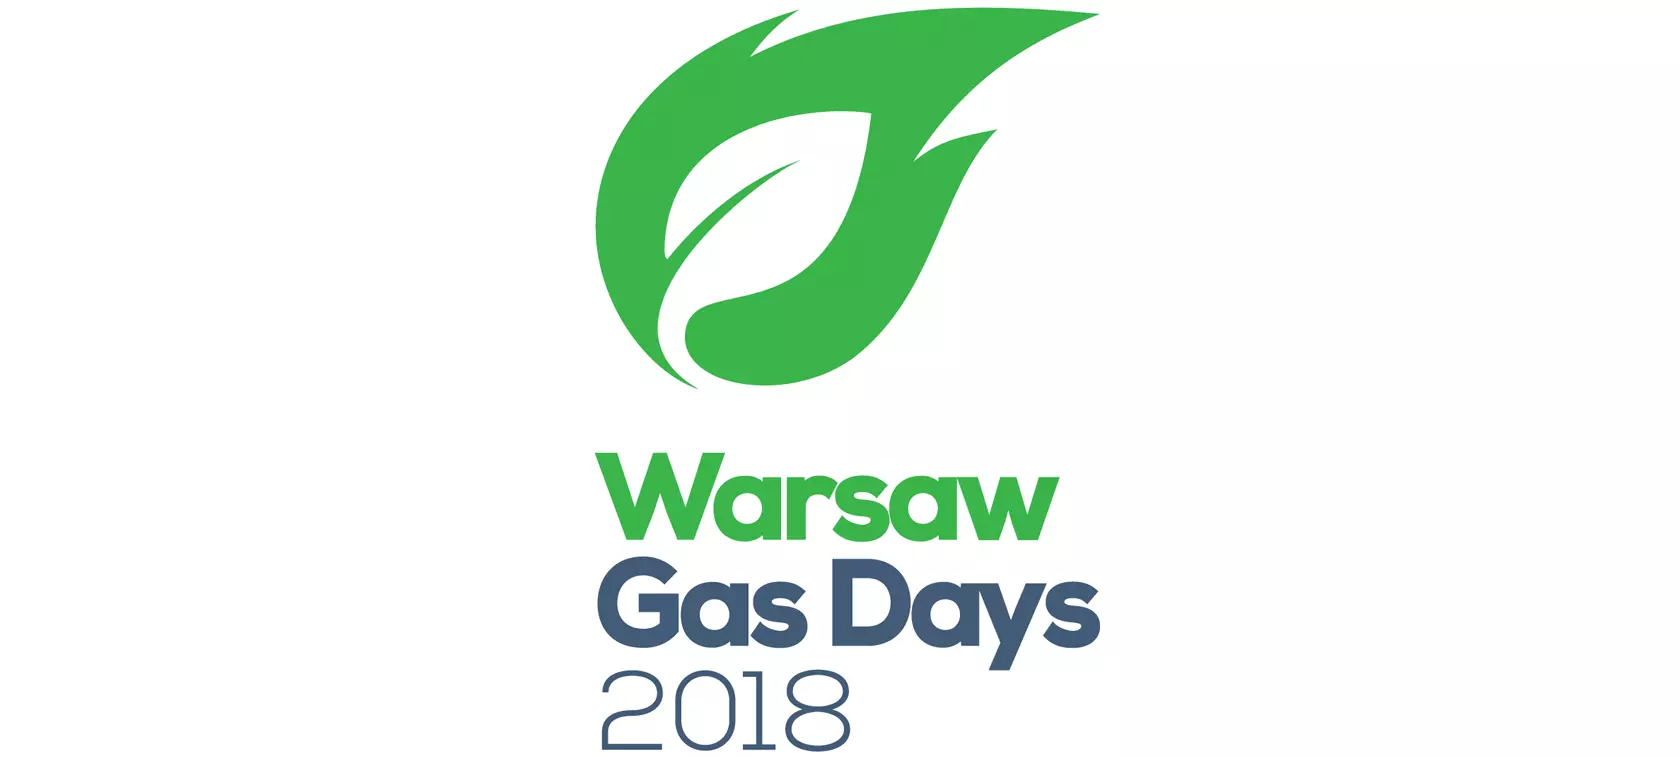 Warsaw Gas Days 2018: mark your calendars!